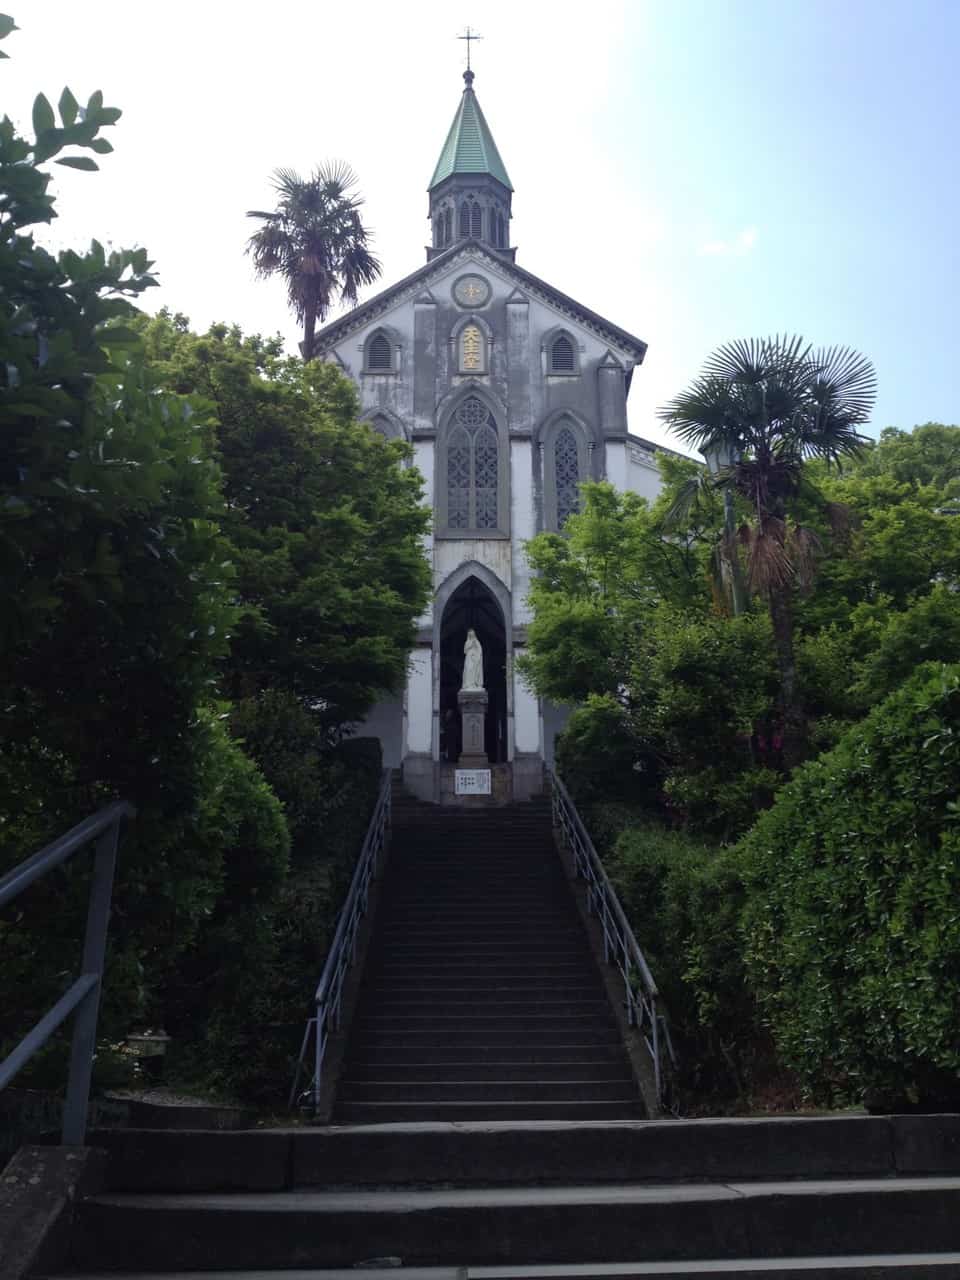 The Oura Catholic Church, Nagasaki: